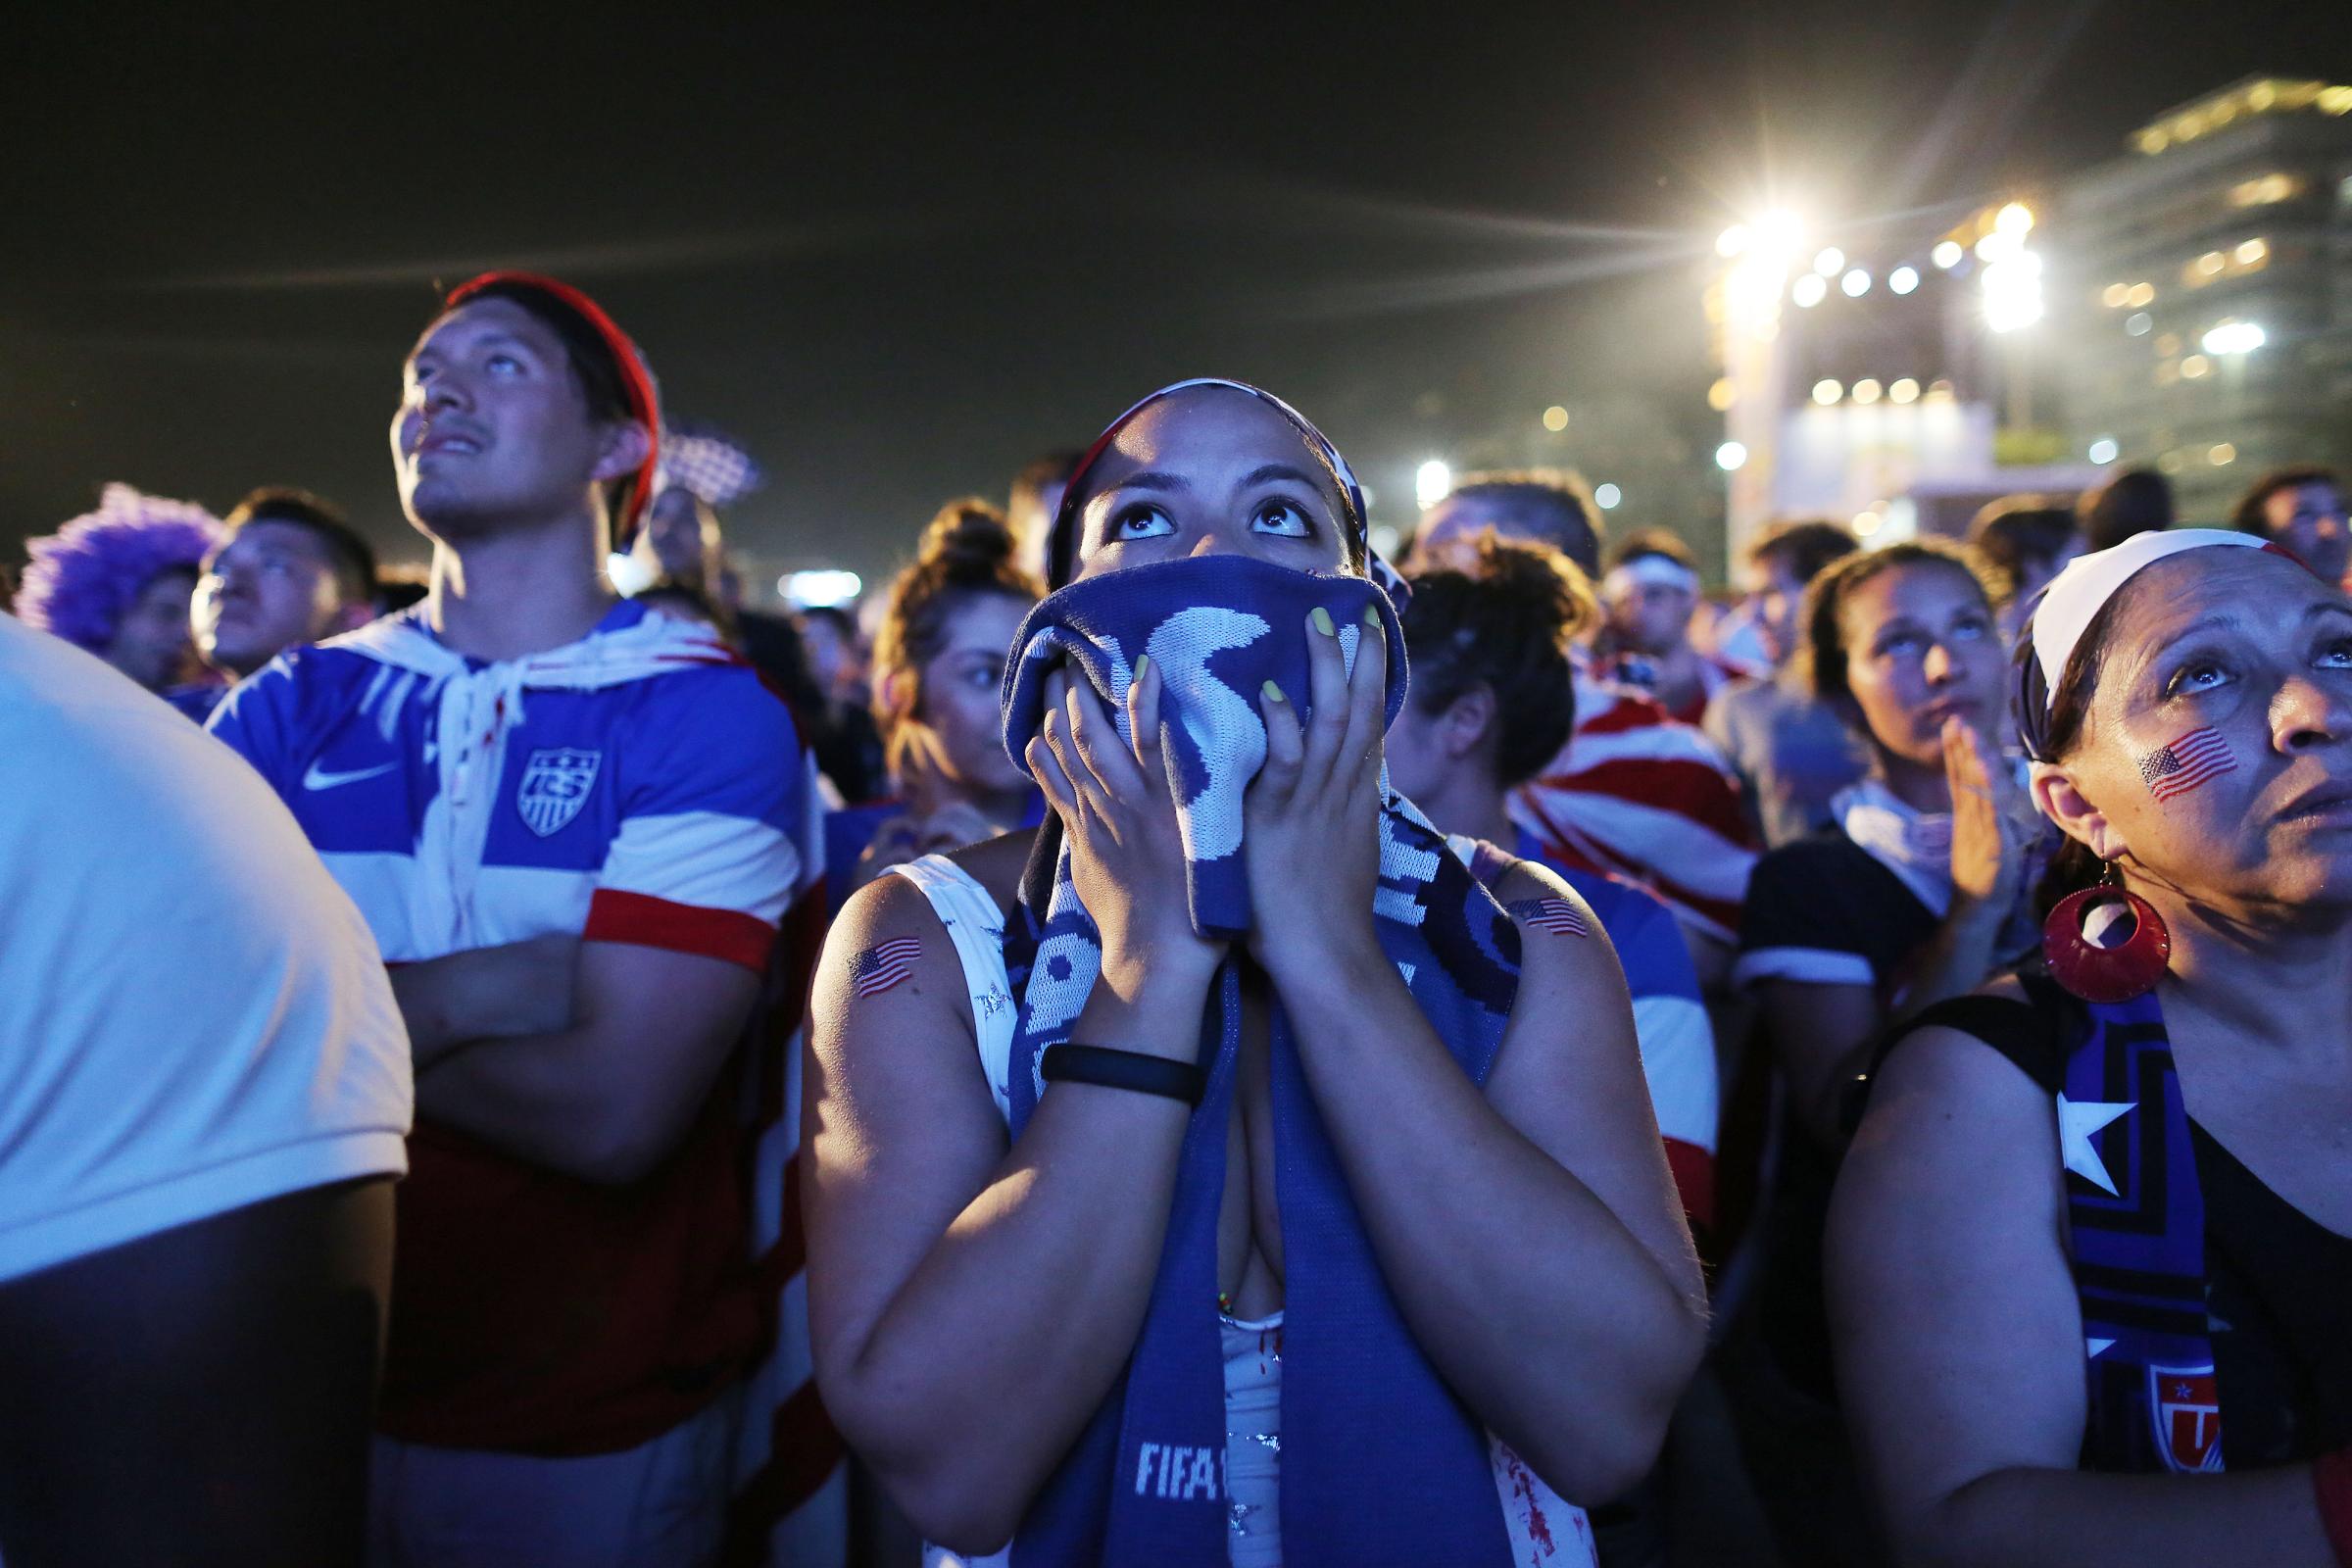 U.S. fans watch a live broadcast of the soccer match between USA and Ghana, inside the FIFA Fan Fest area on Copacabana beach, Rio de Janeiro on June 16, 2014.